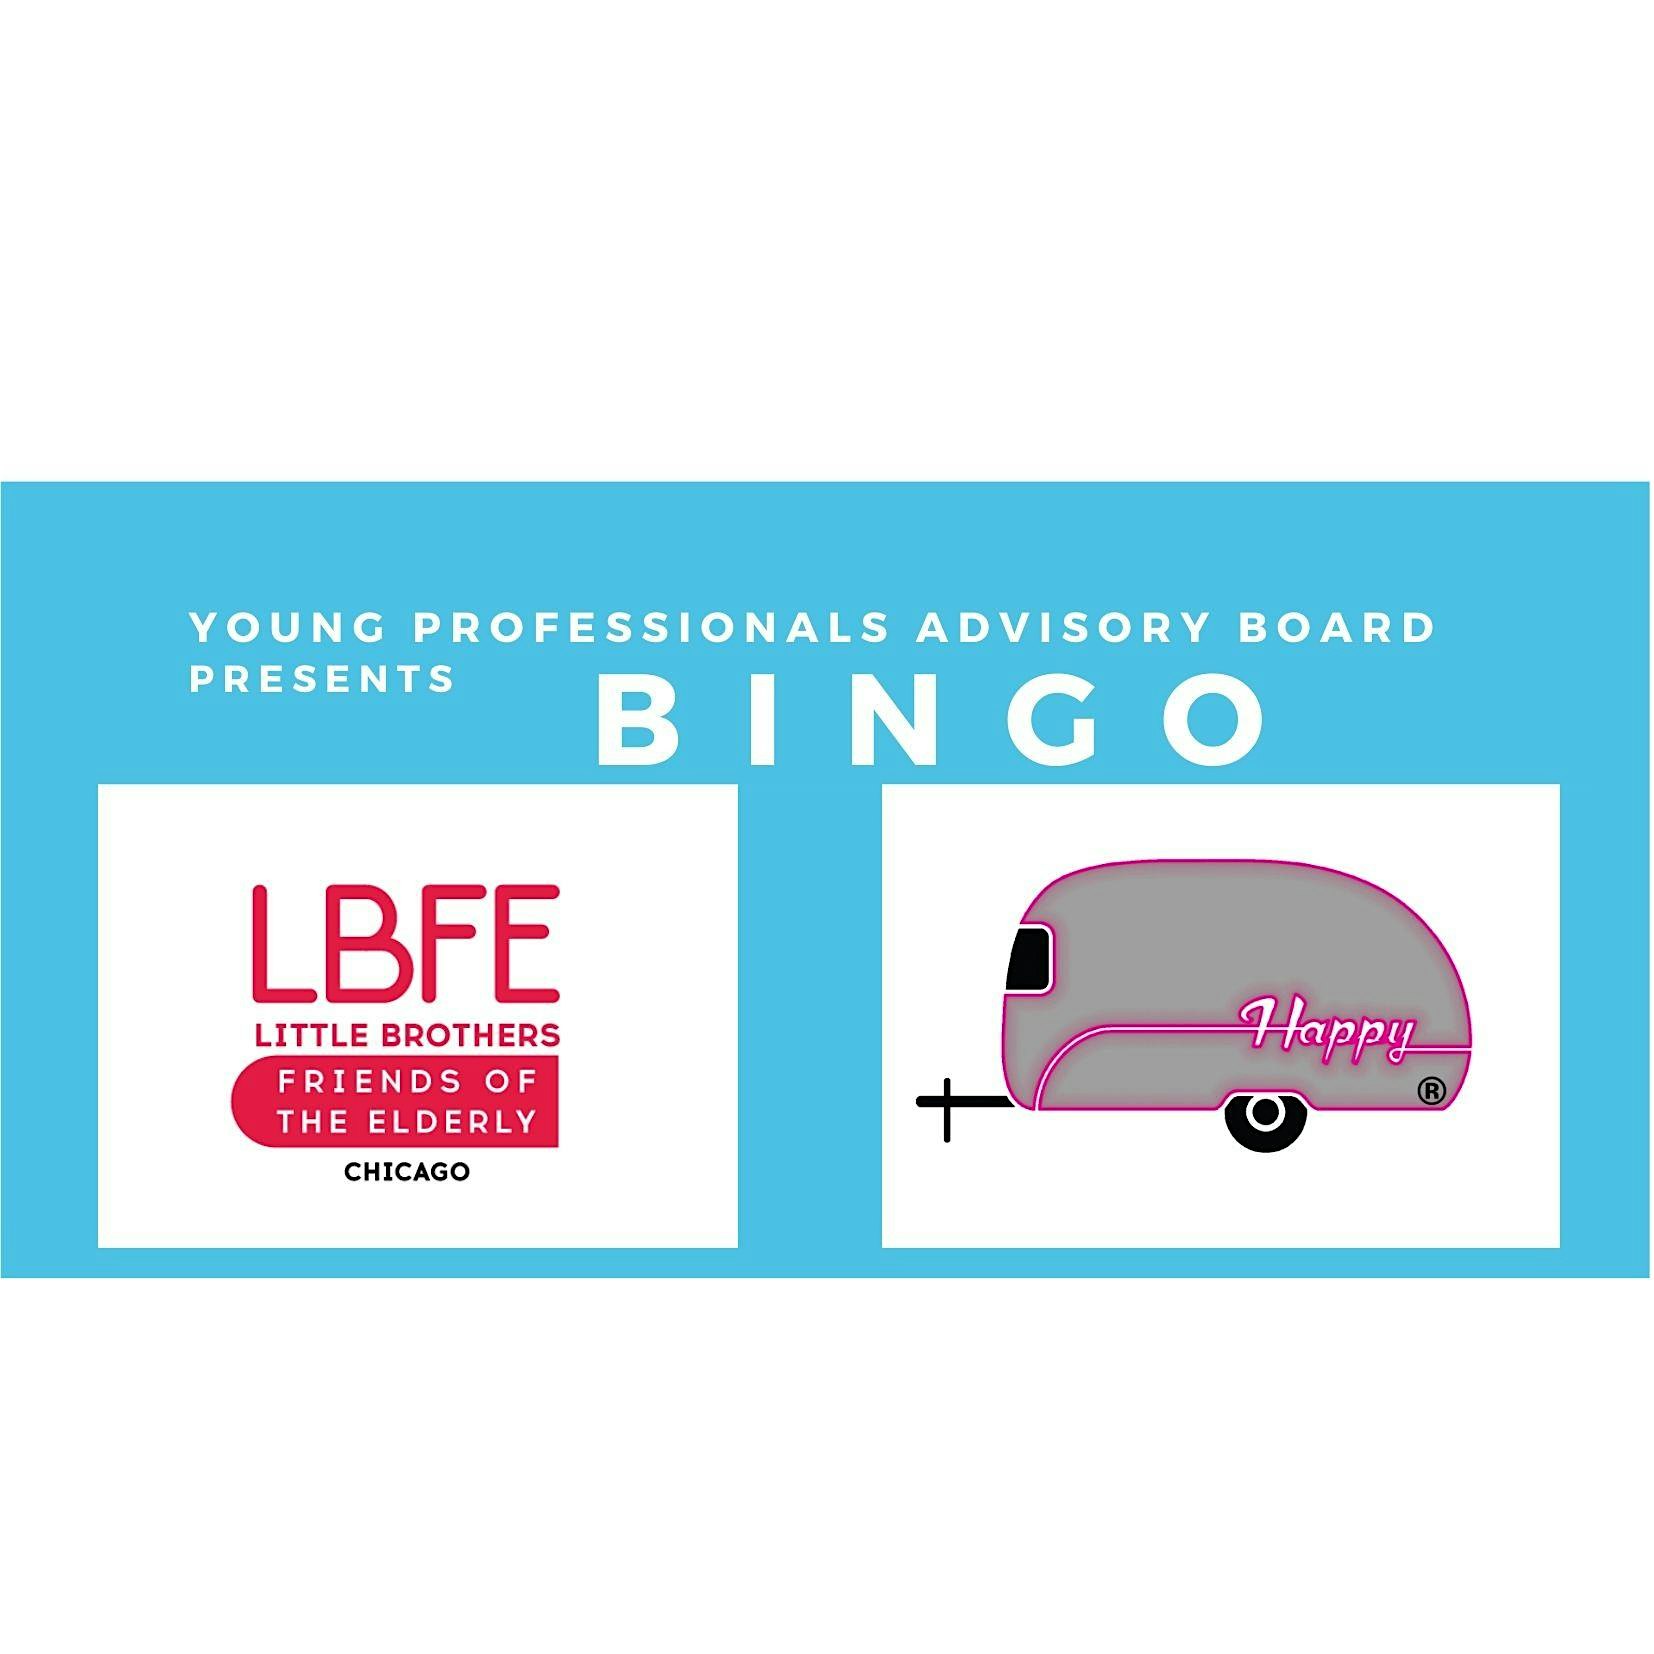 LBFE's Young Professionals Advisory Board Bingo